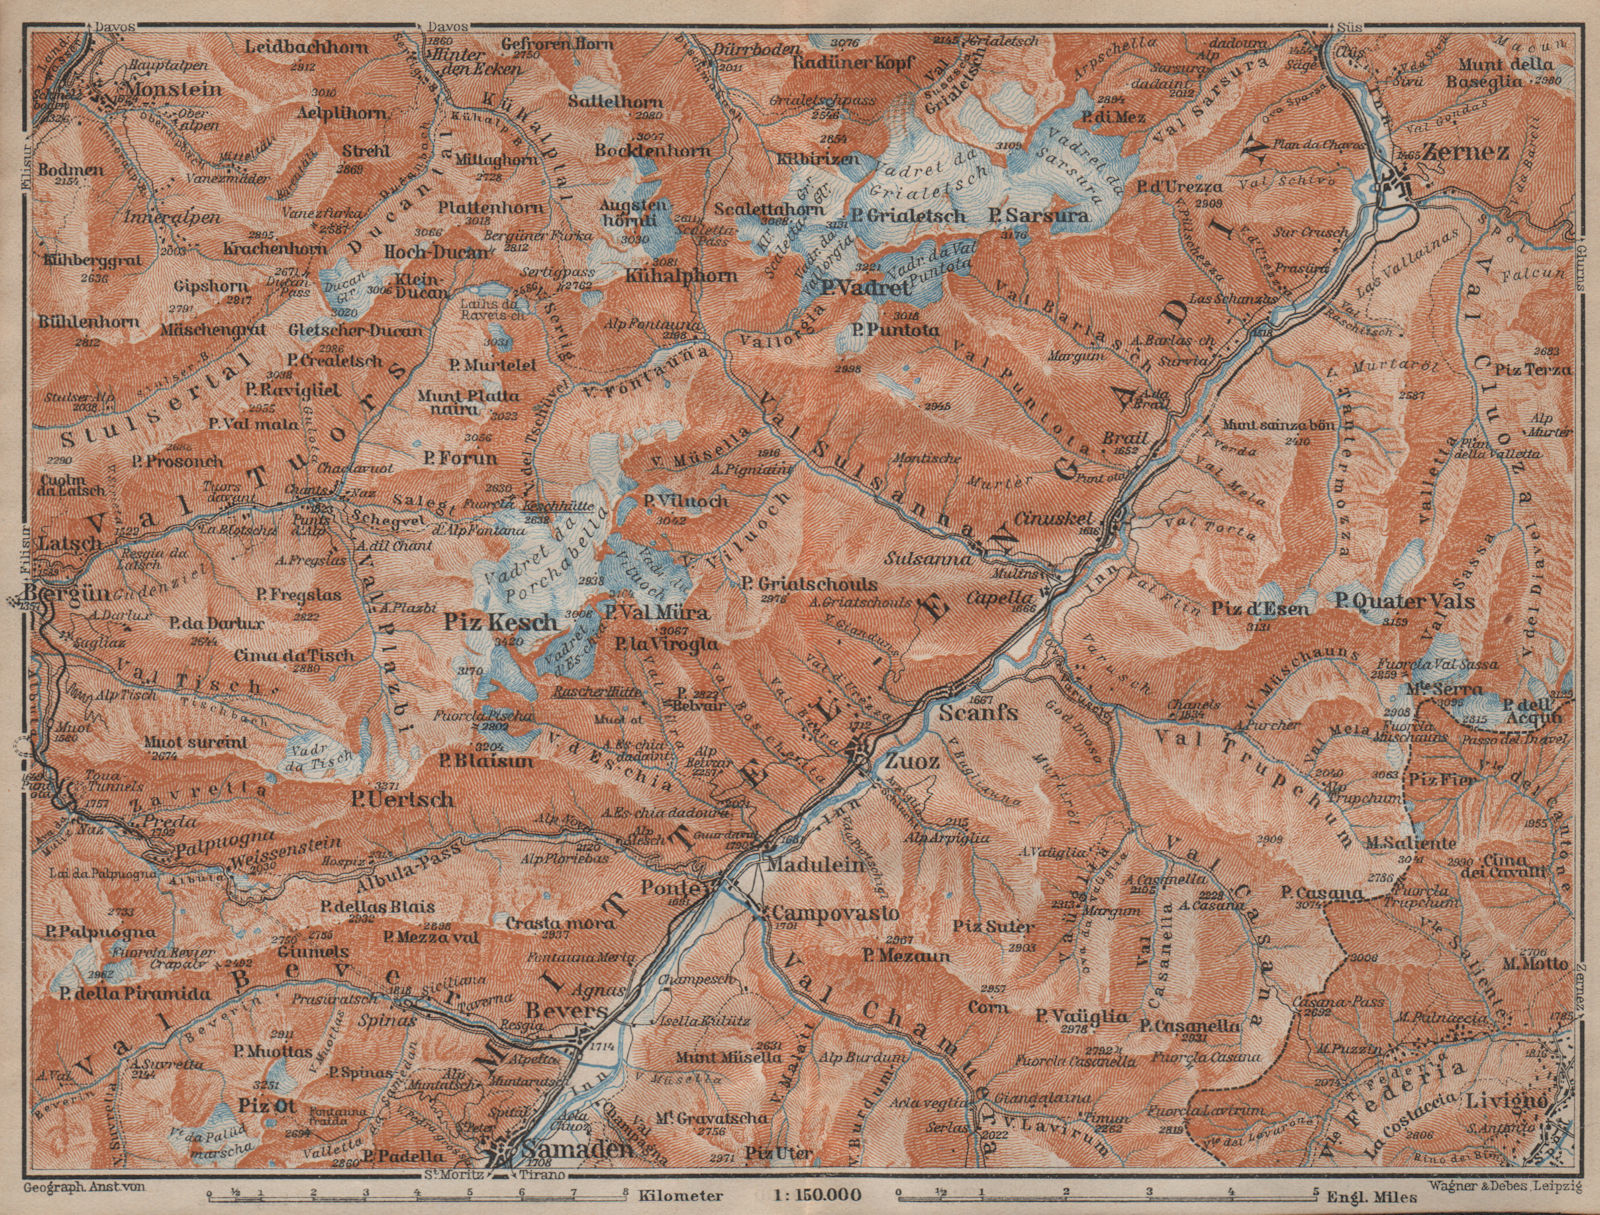 MIDDLE ENGADINE VALLEY. Samedan-Zernez. Zuoz Livigno Albula Alps 1913 old map